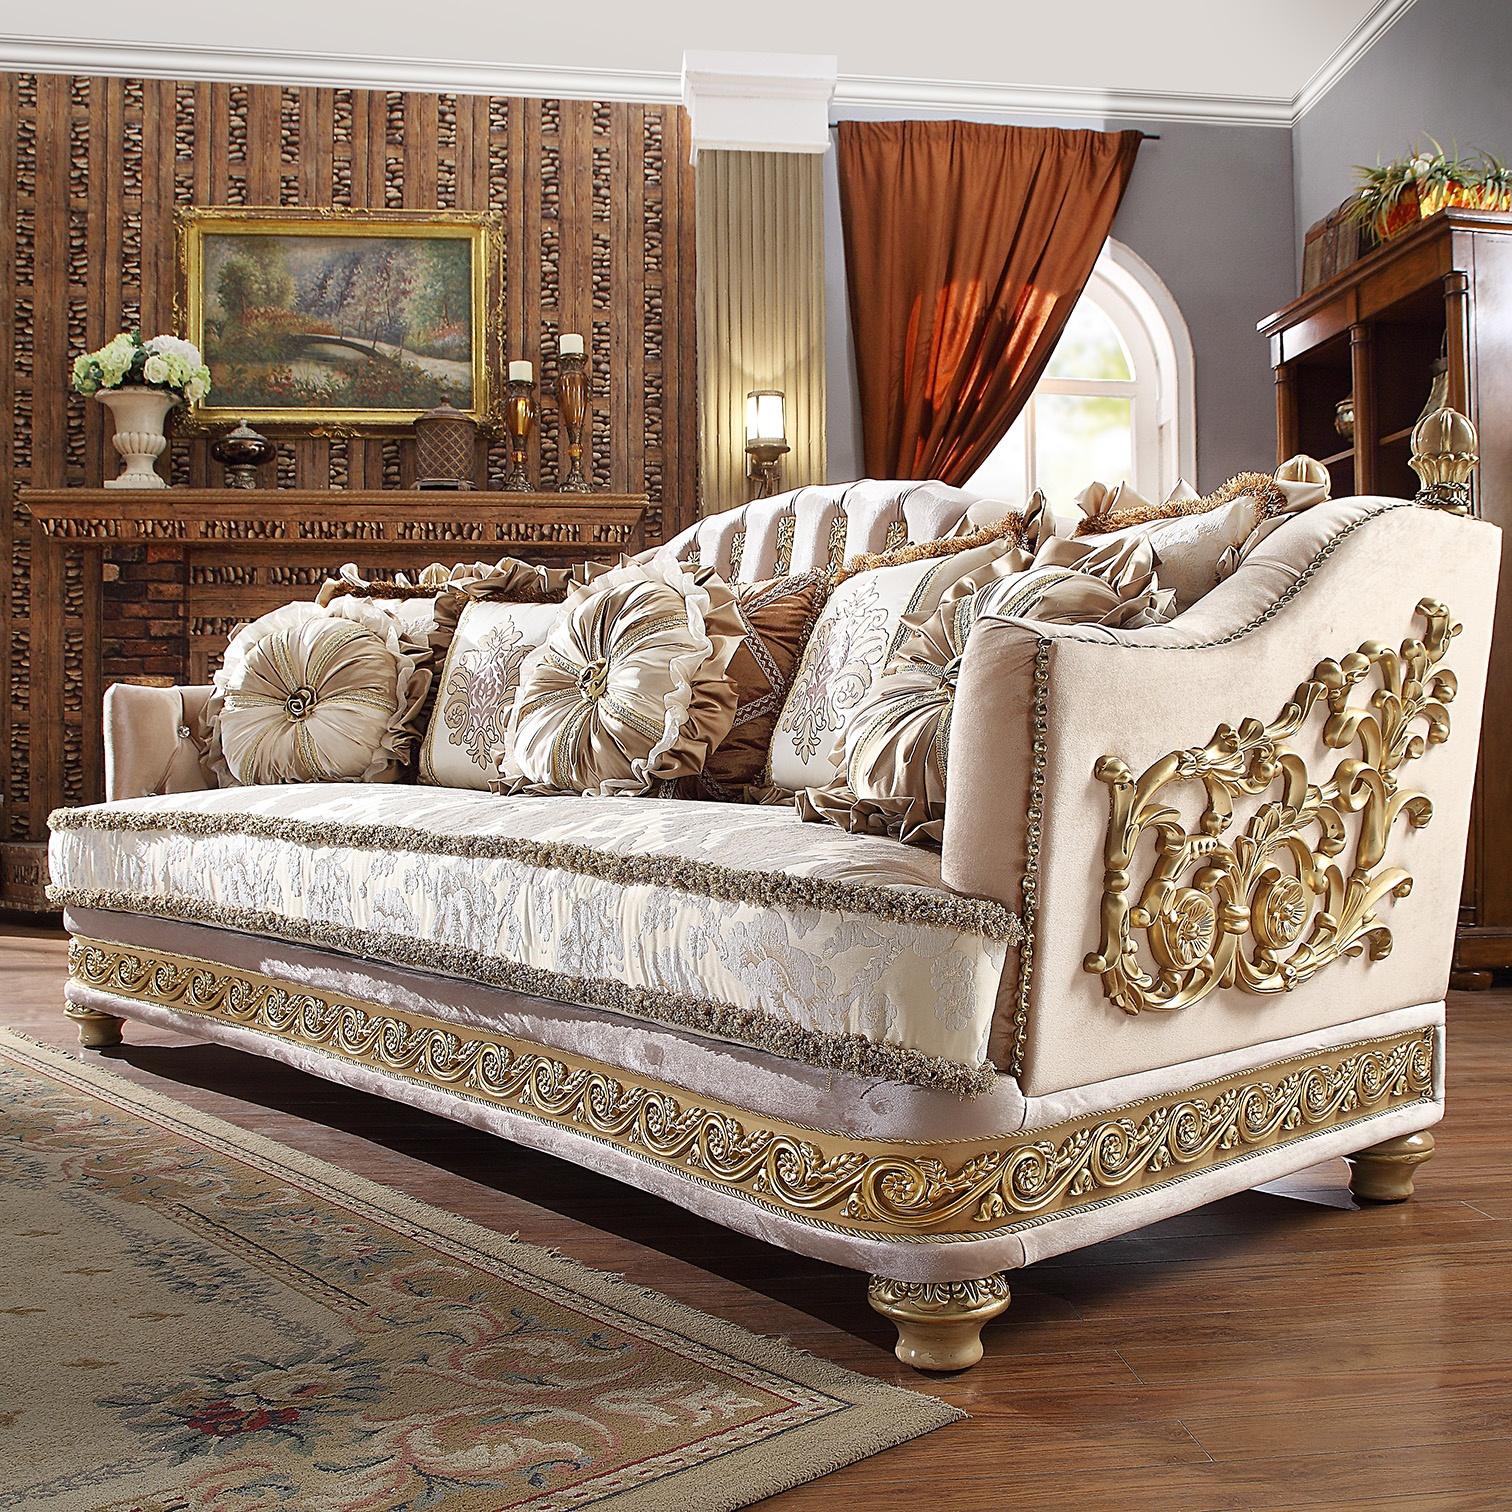 

    
Homey Design Furniture HD-814 Sofa Loveseat and Chair Set Cherry/Tan/Gold HD-814-SSET3
